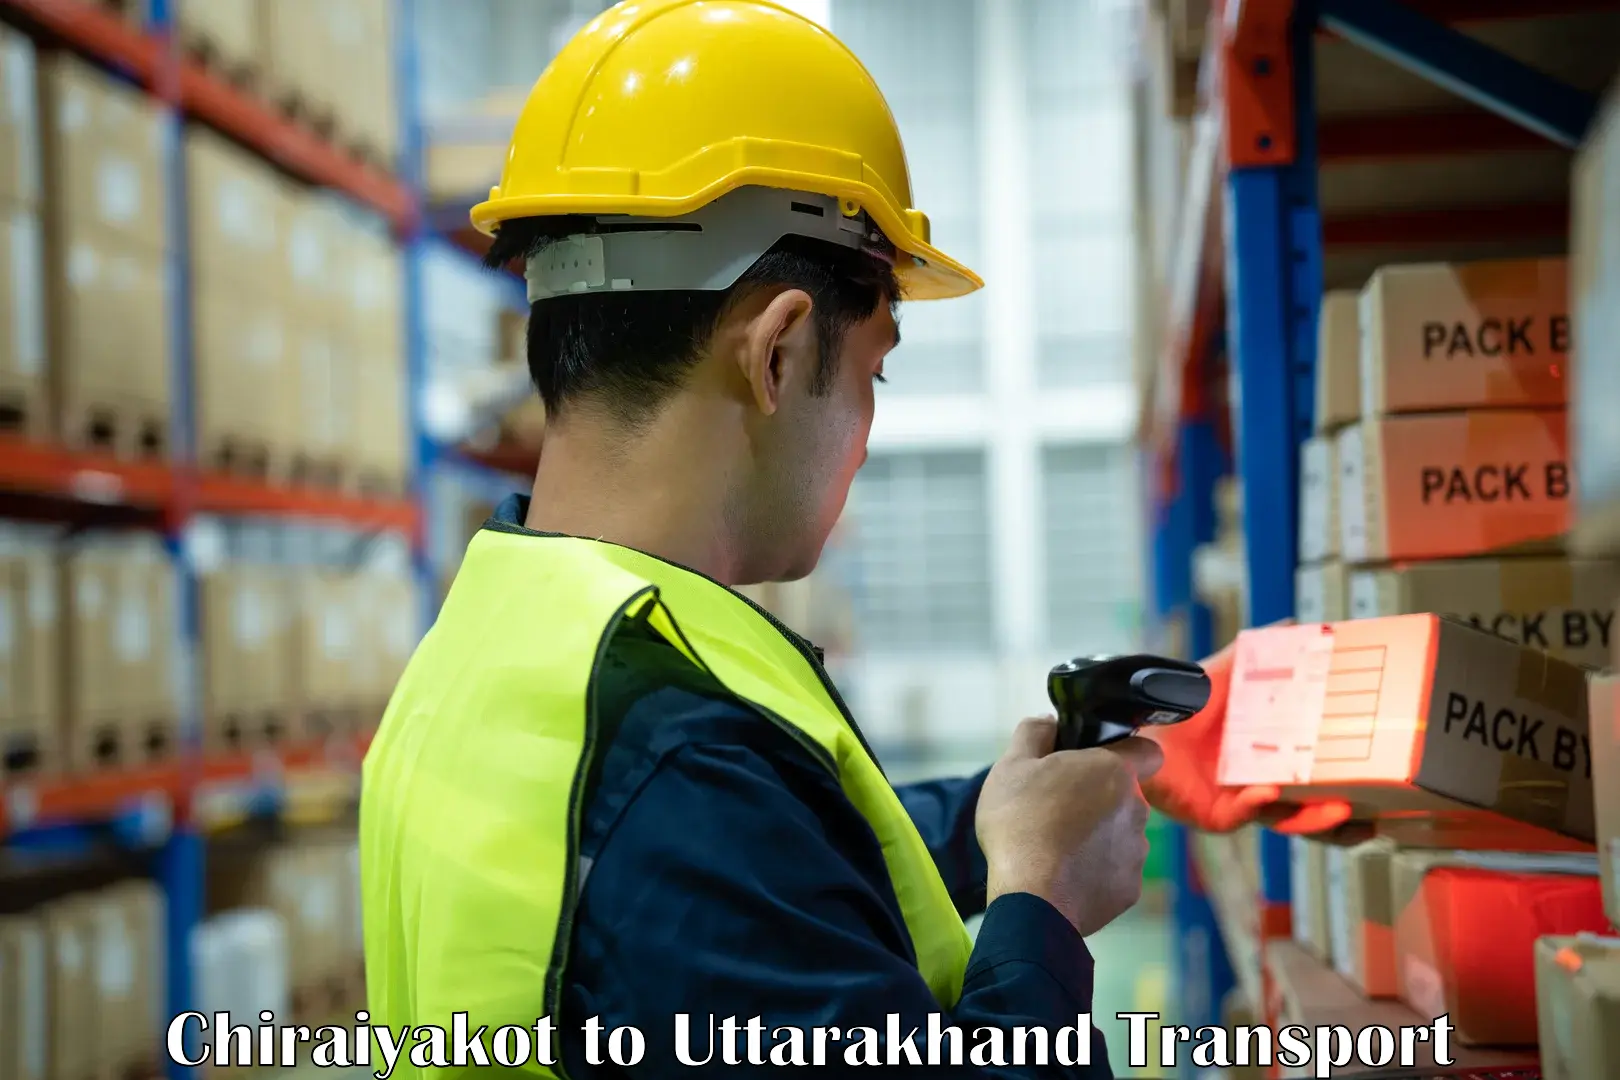 Truck transport companies in India Chiraiyakot to Uttarkashi